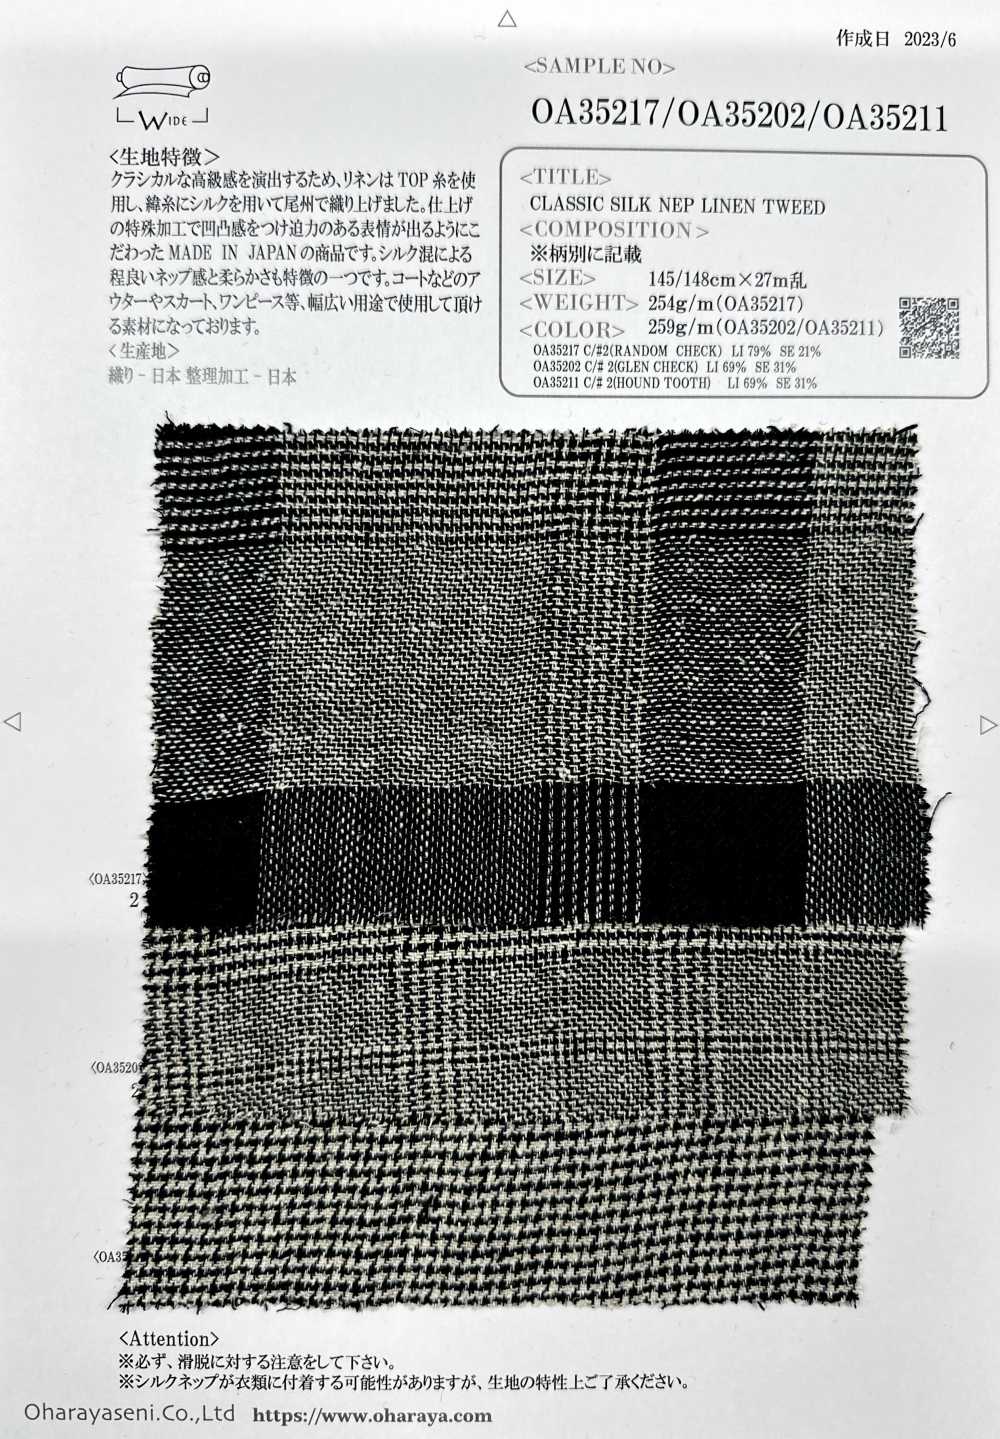 OA35211 KLASSISCHER LEINEN-NEP-LEINEN-TWEED[Textilgewebe] Oharayaseni